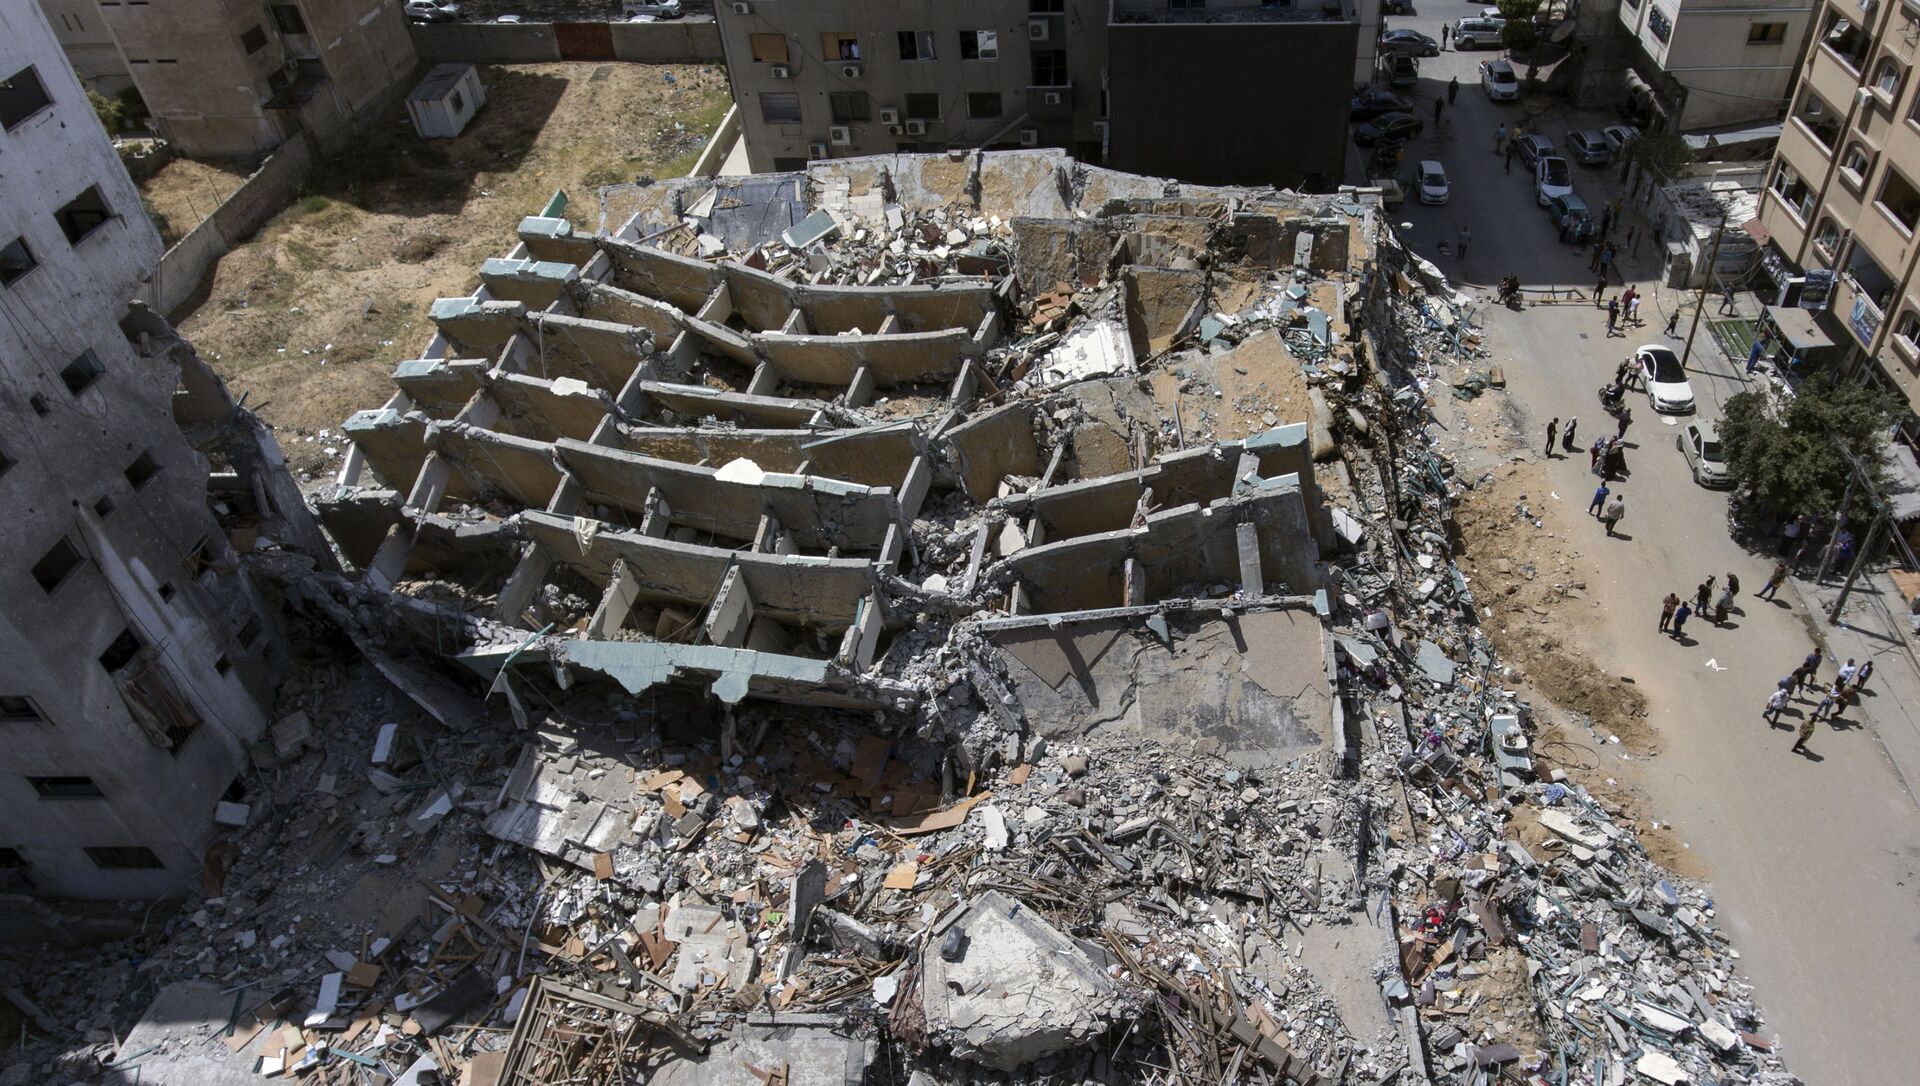 Destructions à Gaza après l'escalade des tensions avec Israël en mai 2021 - Sputnik Afrique, 1920, 16.06.2021